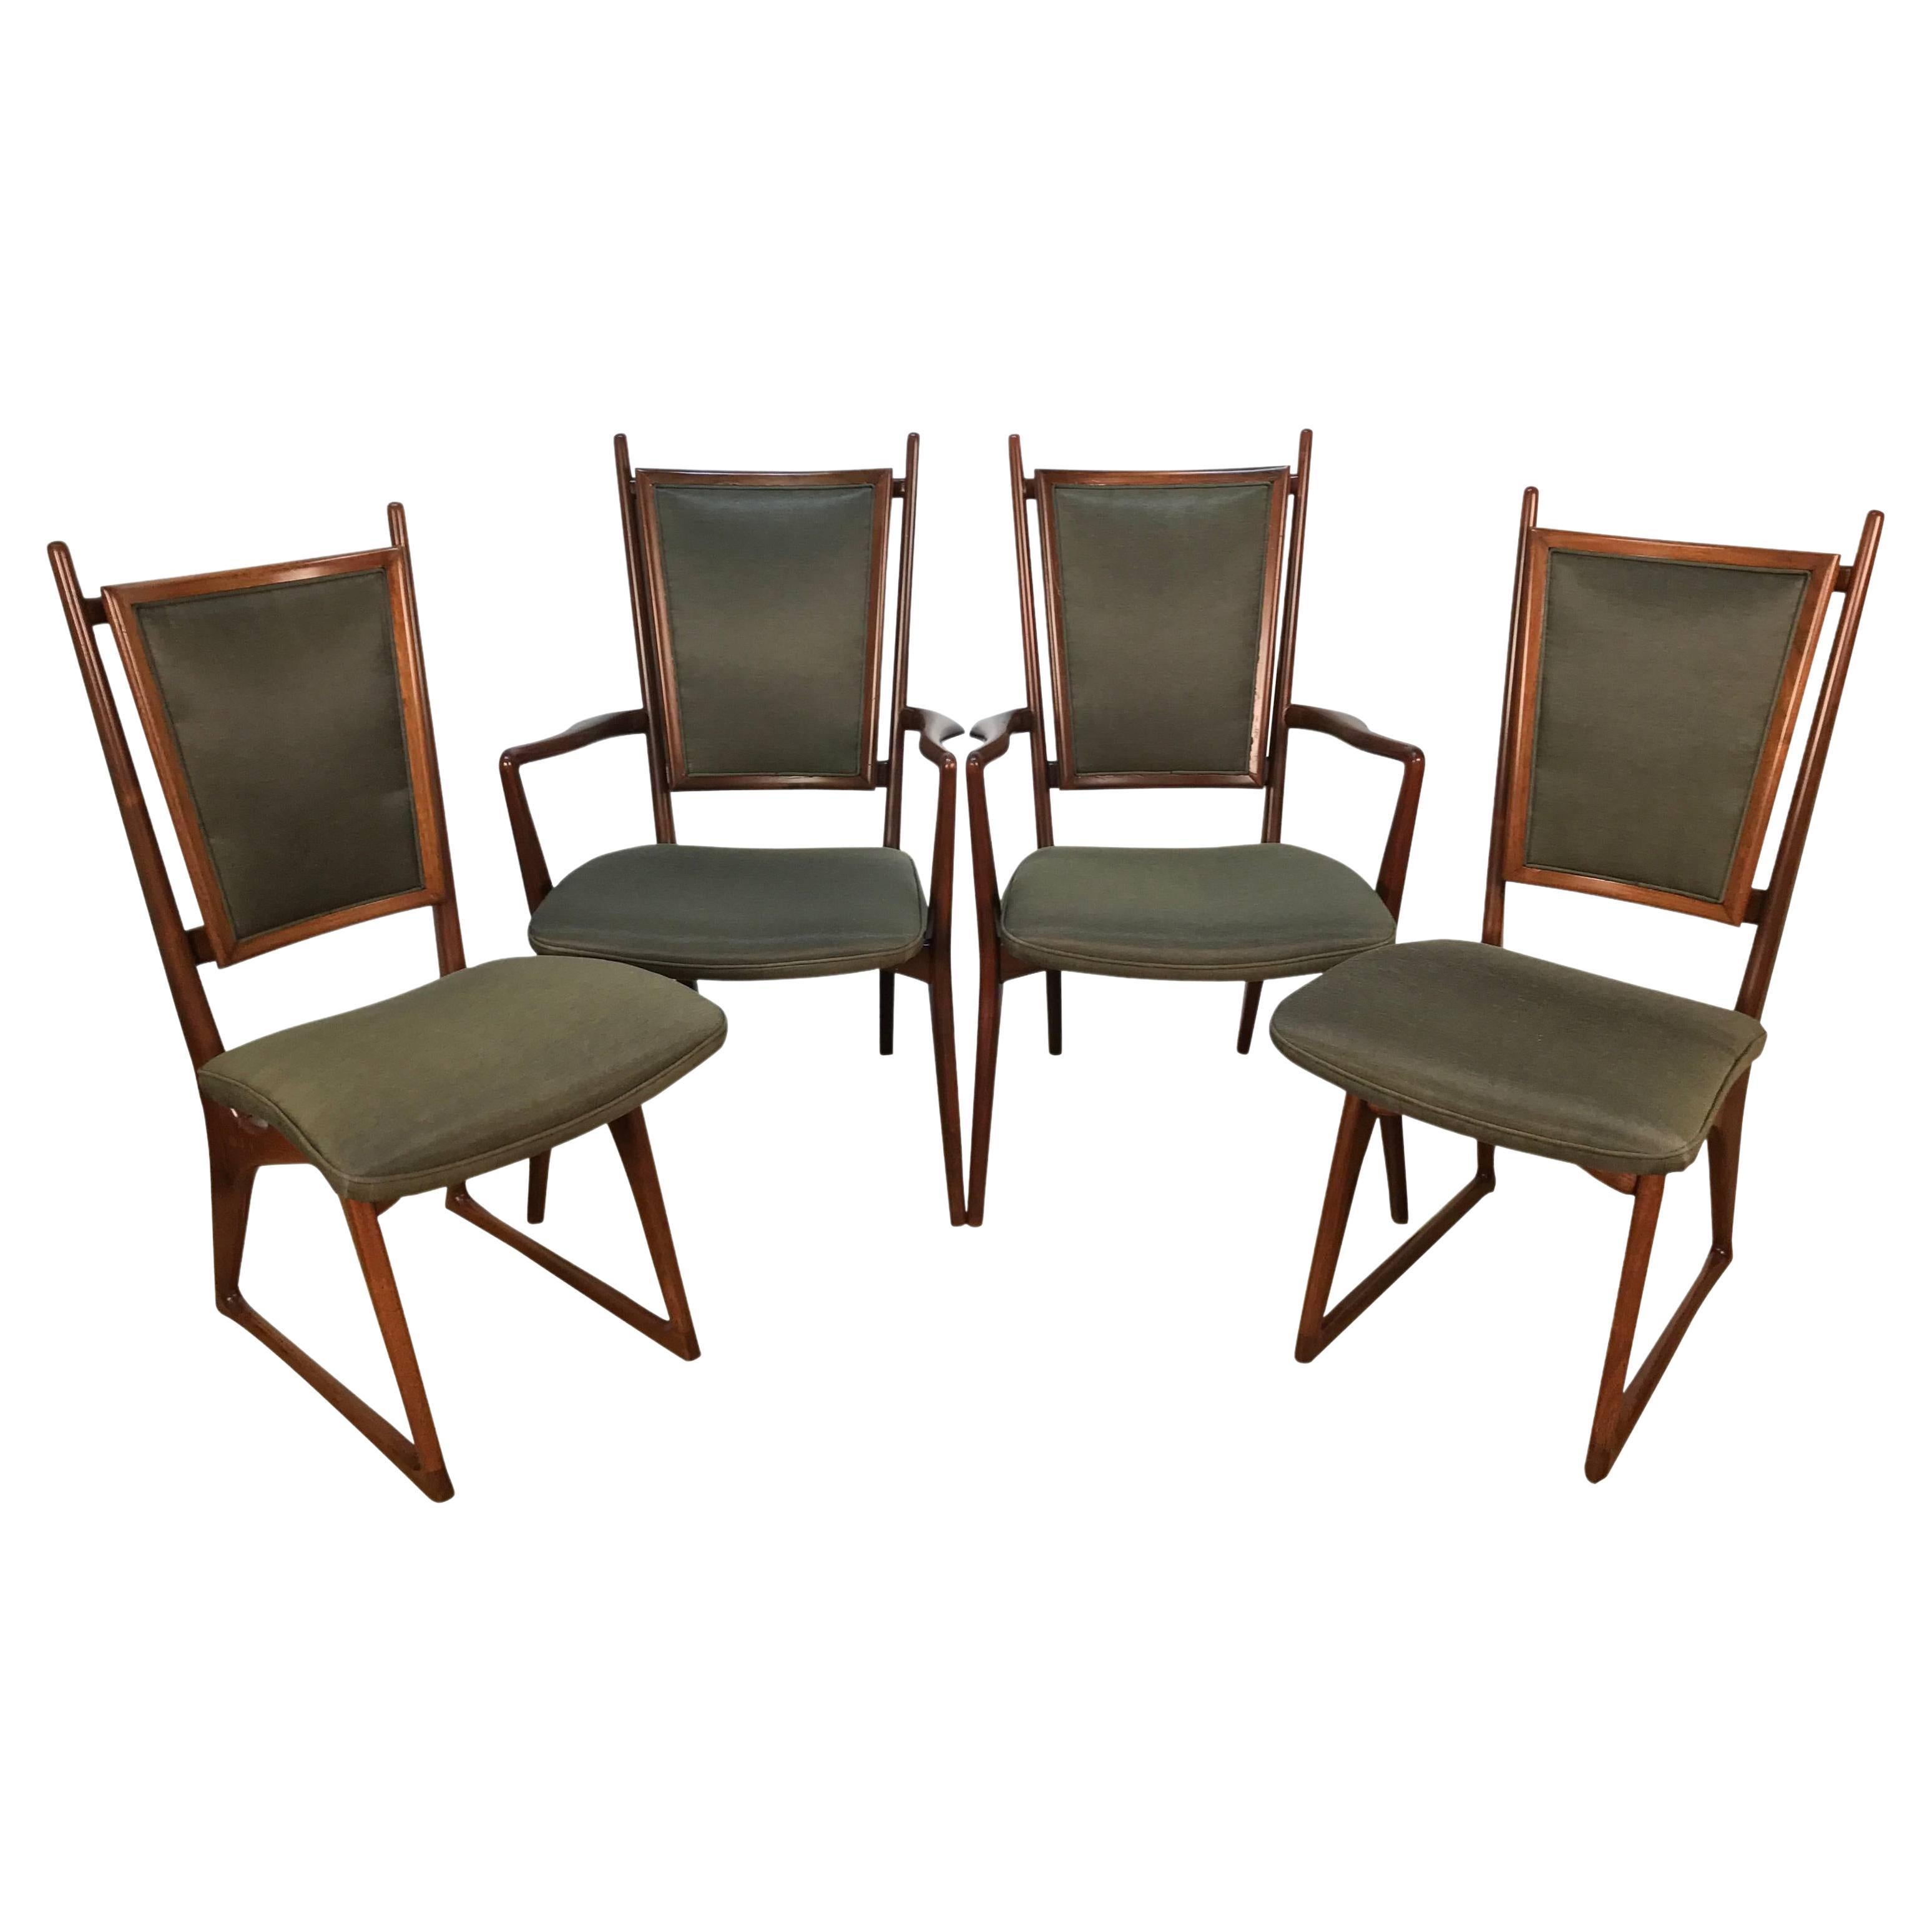 Four Vladimir Kagan Dining Chairs